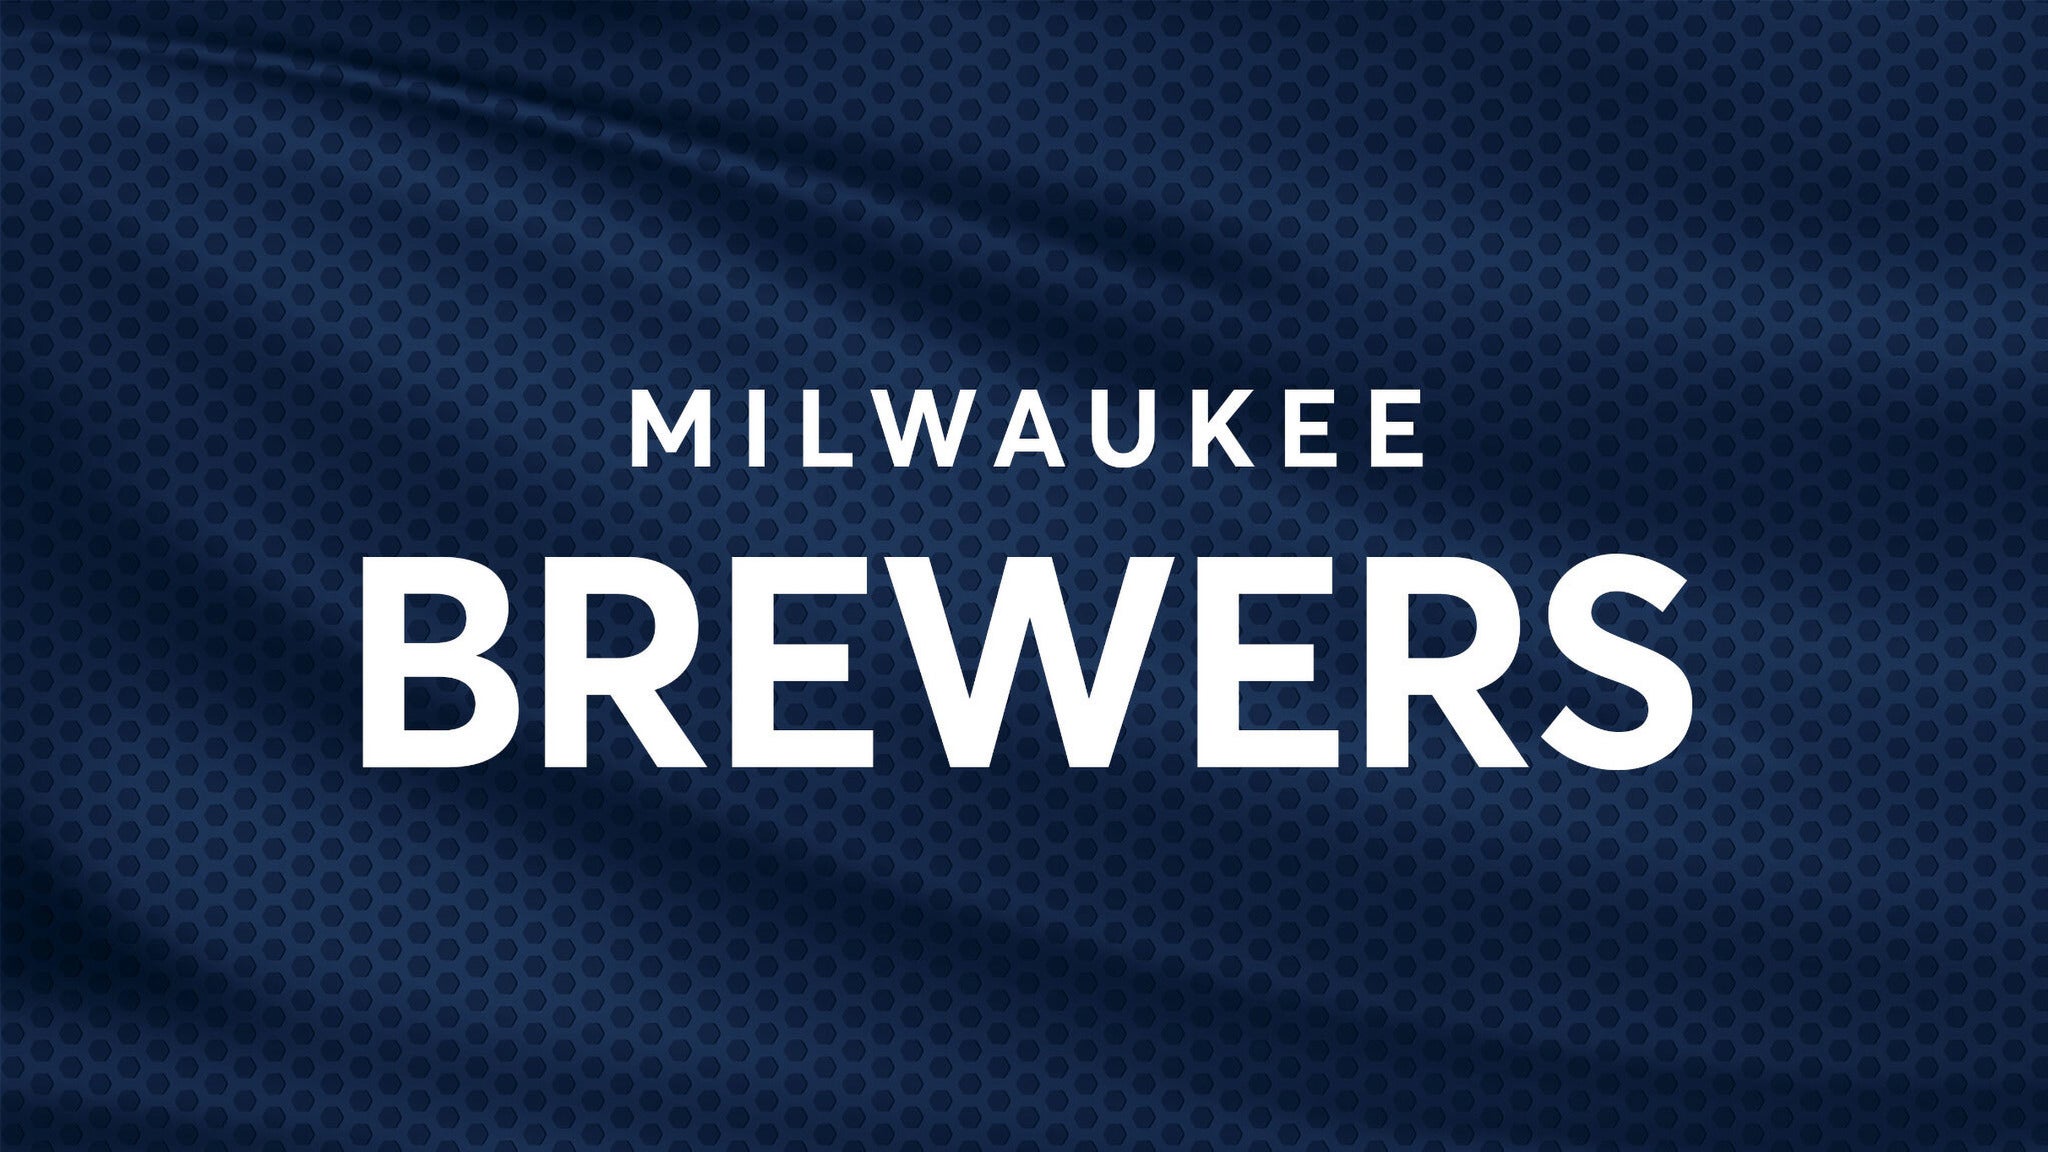 Amazoncom  MLB  Milwaukee Brewers Heavy Duty Aluminum Color Emblem   Automotive Decorative Emblems  Sports  Outdoors